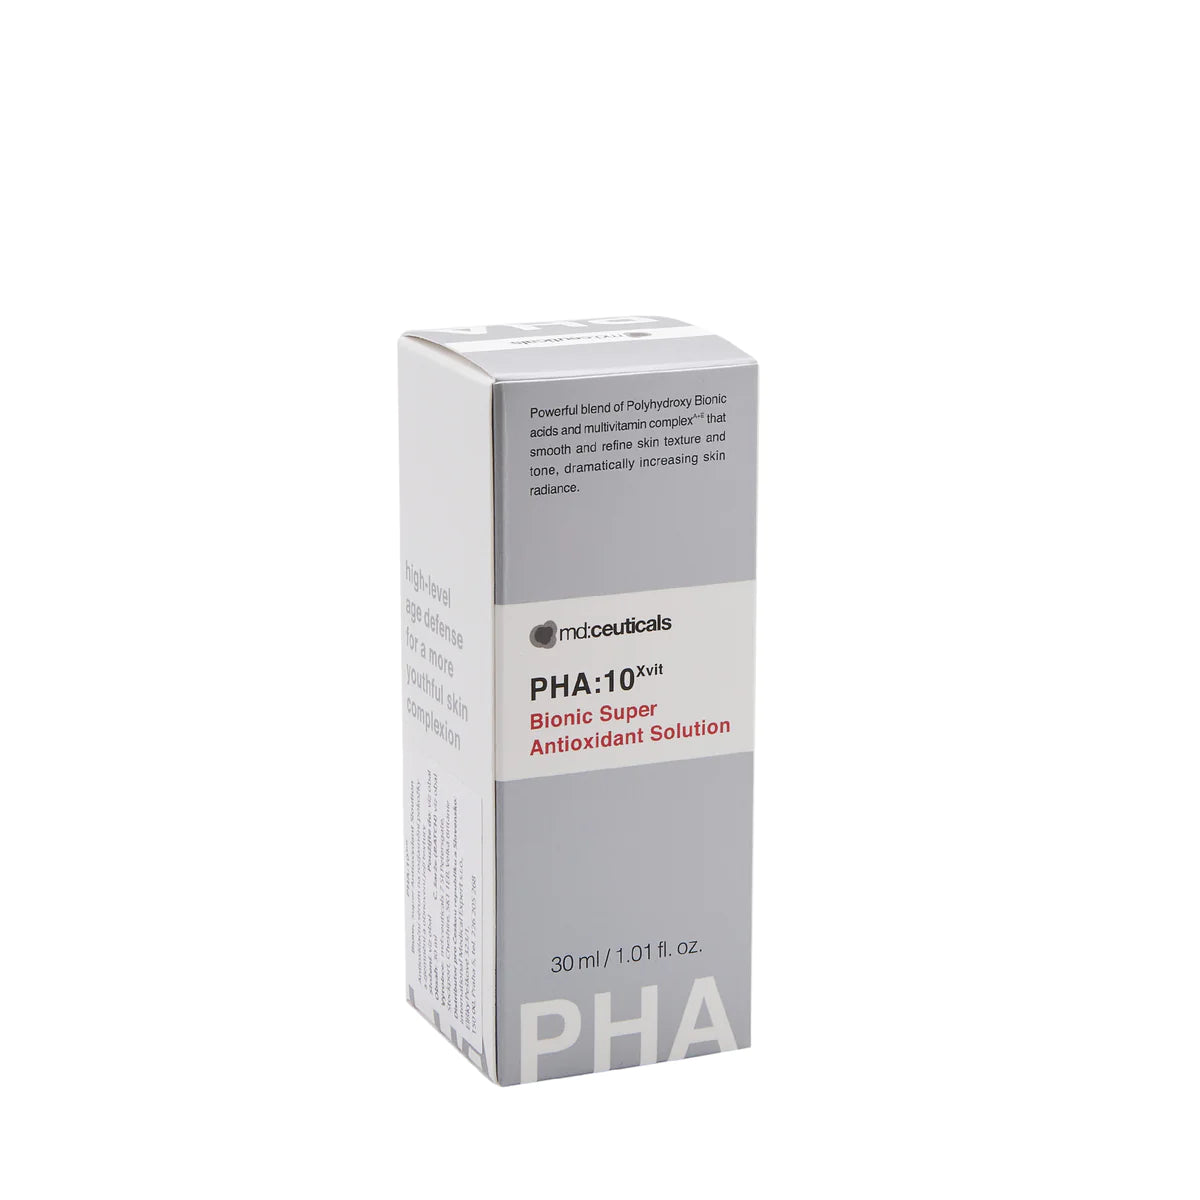 md:ceuticals PHA: 10Xvit Bionic Super Antioxidant Solution